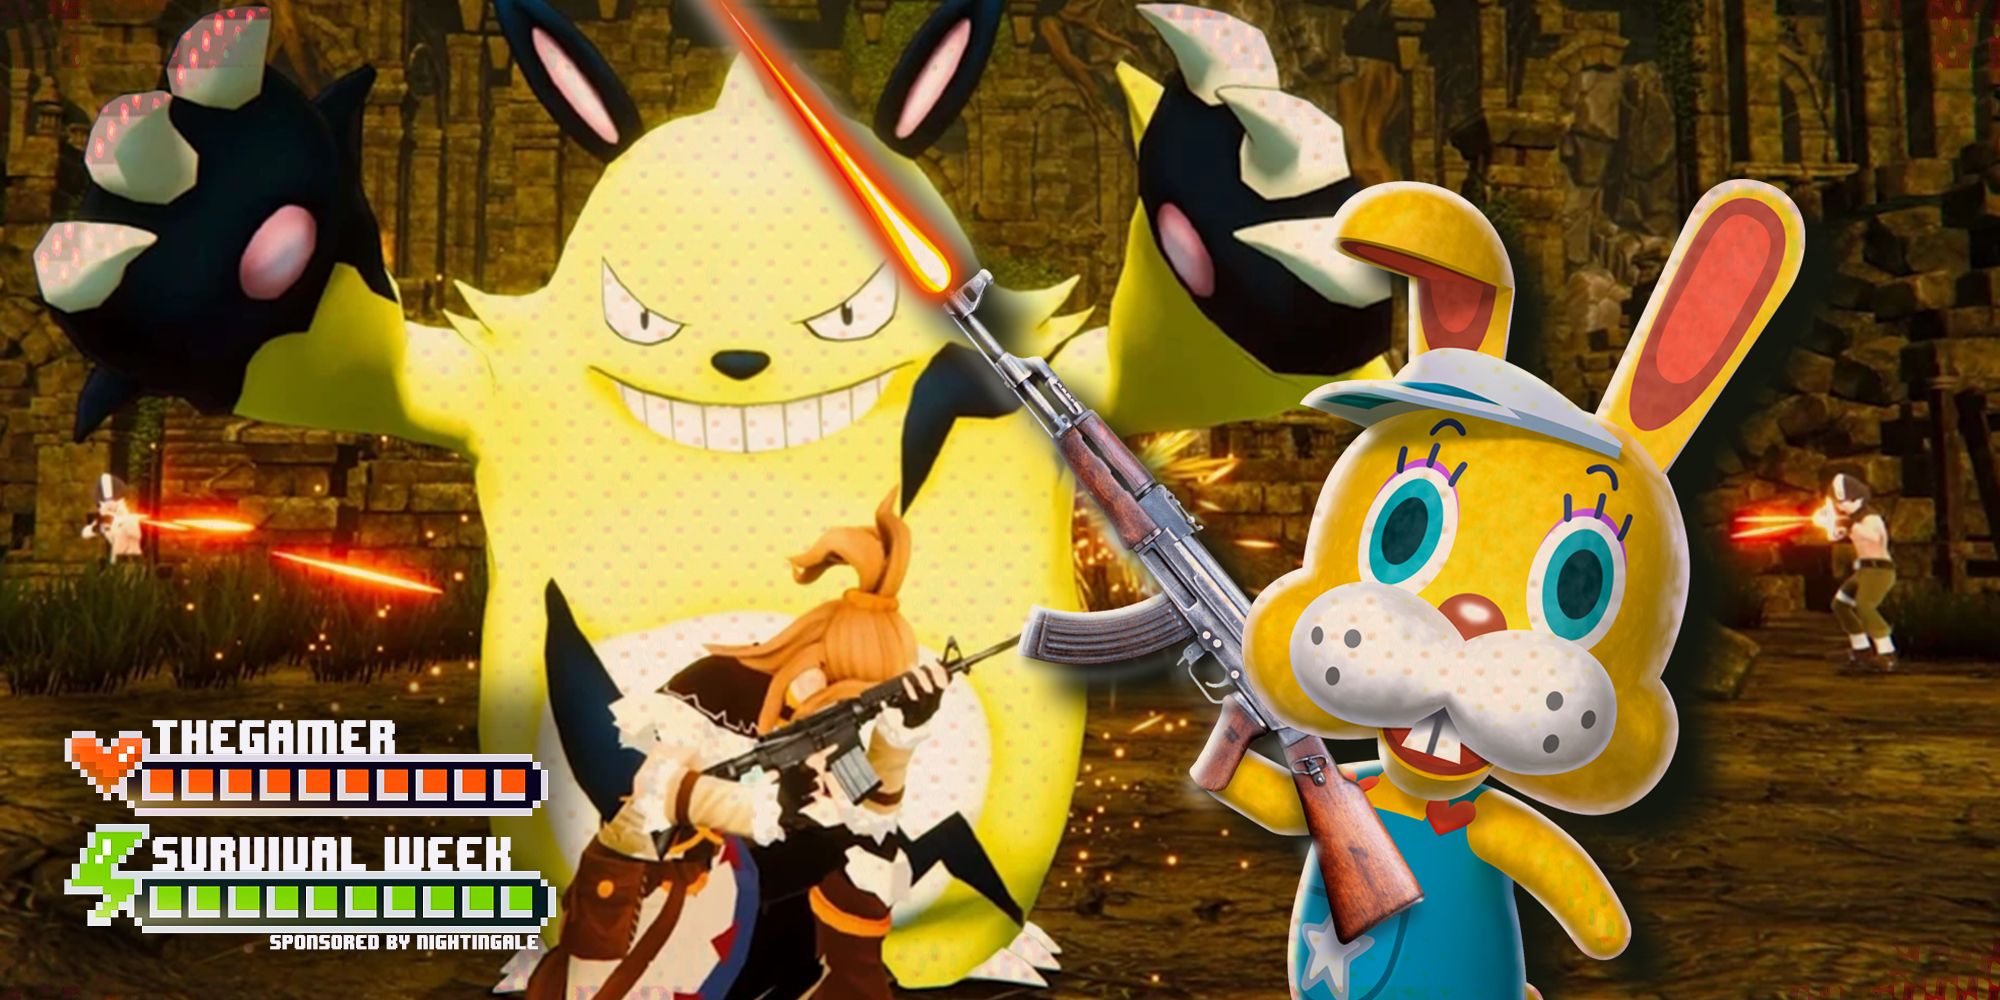 Animal Crossing rabbit next to yellow Palworld pal holding a gun